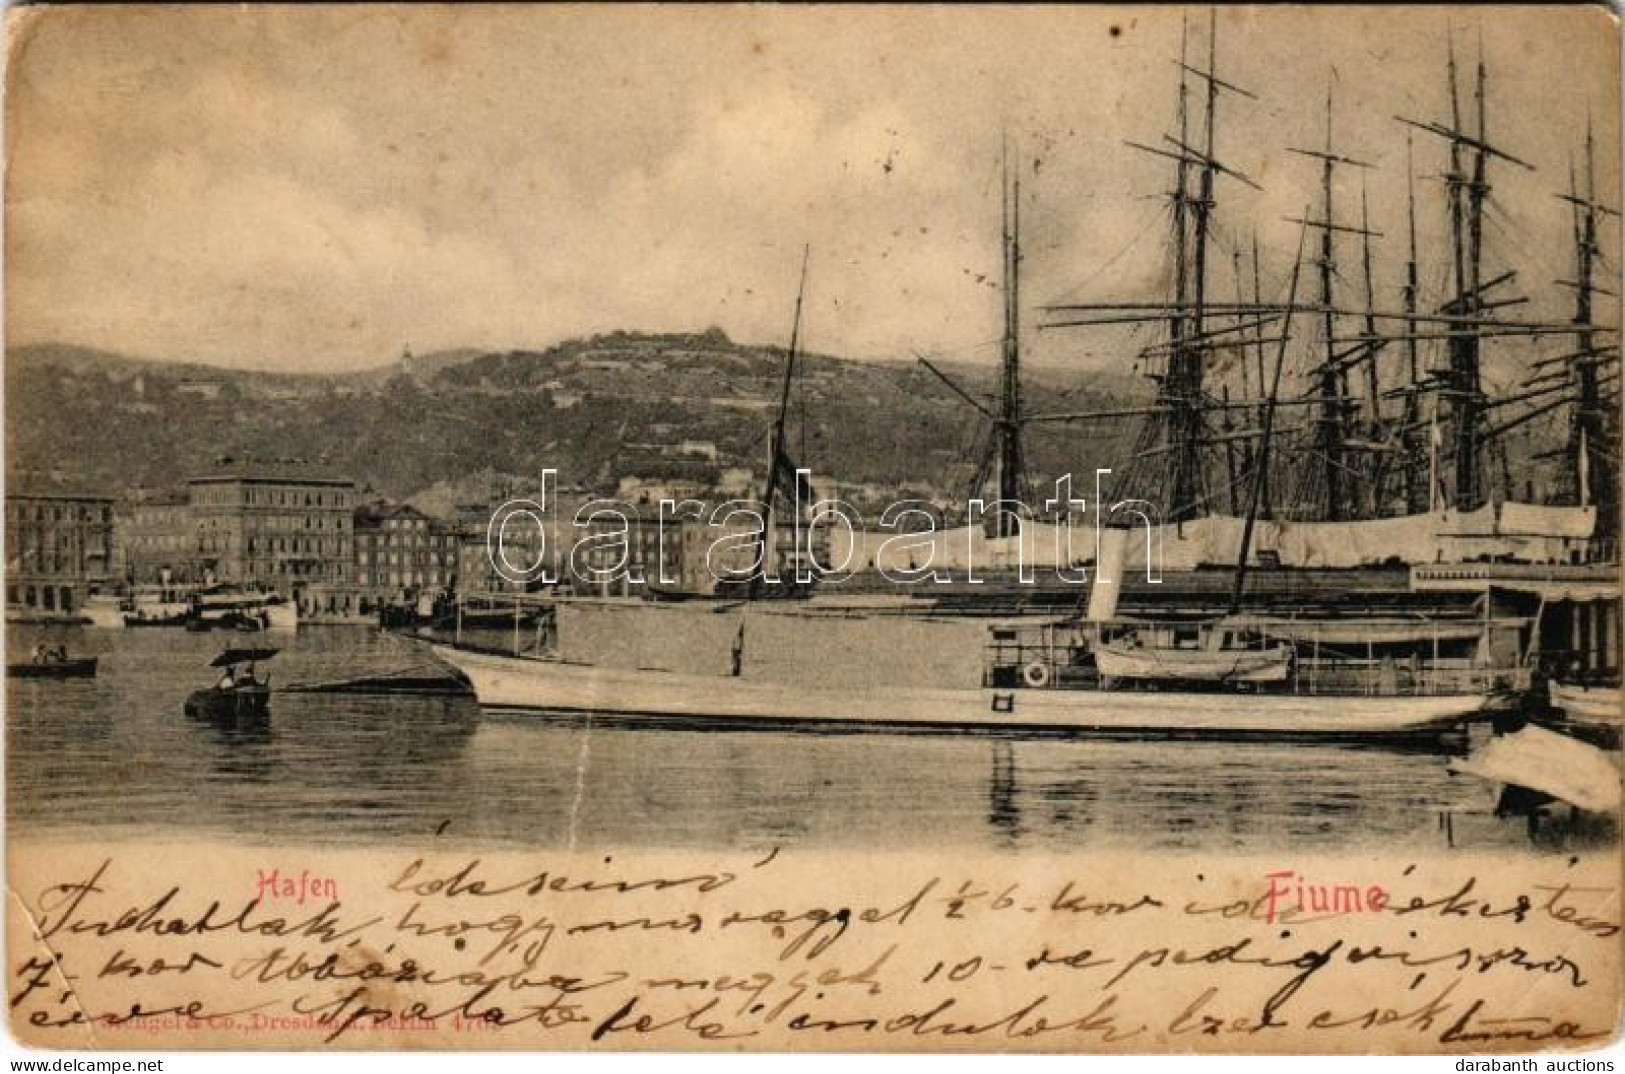 * T3 1903 Fiume, Rijeka; Hafen / Kikötő, Gőzhajó / Port, Steamship (gyűrődés / Crease) - Non Classificati